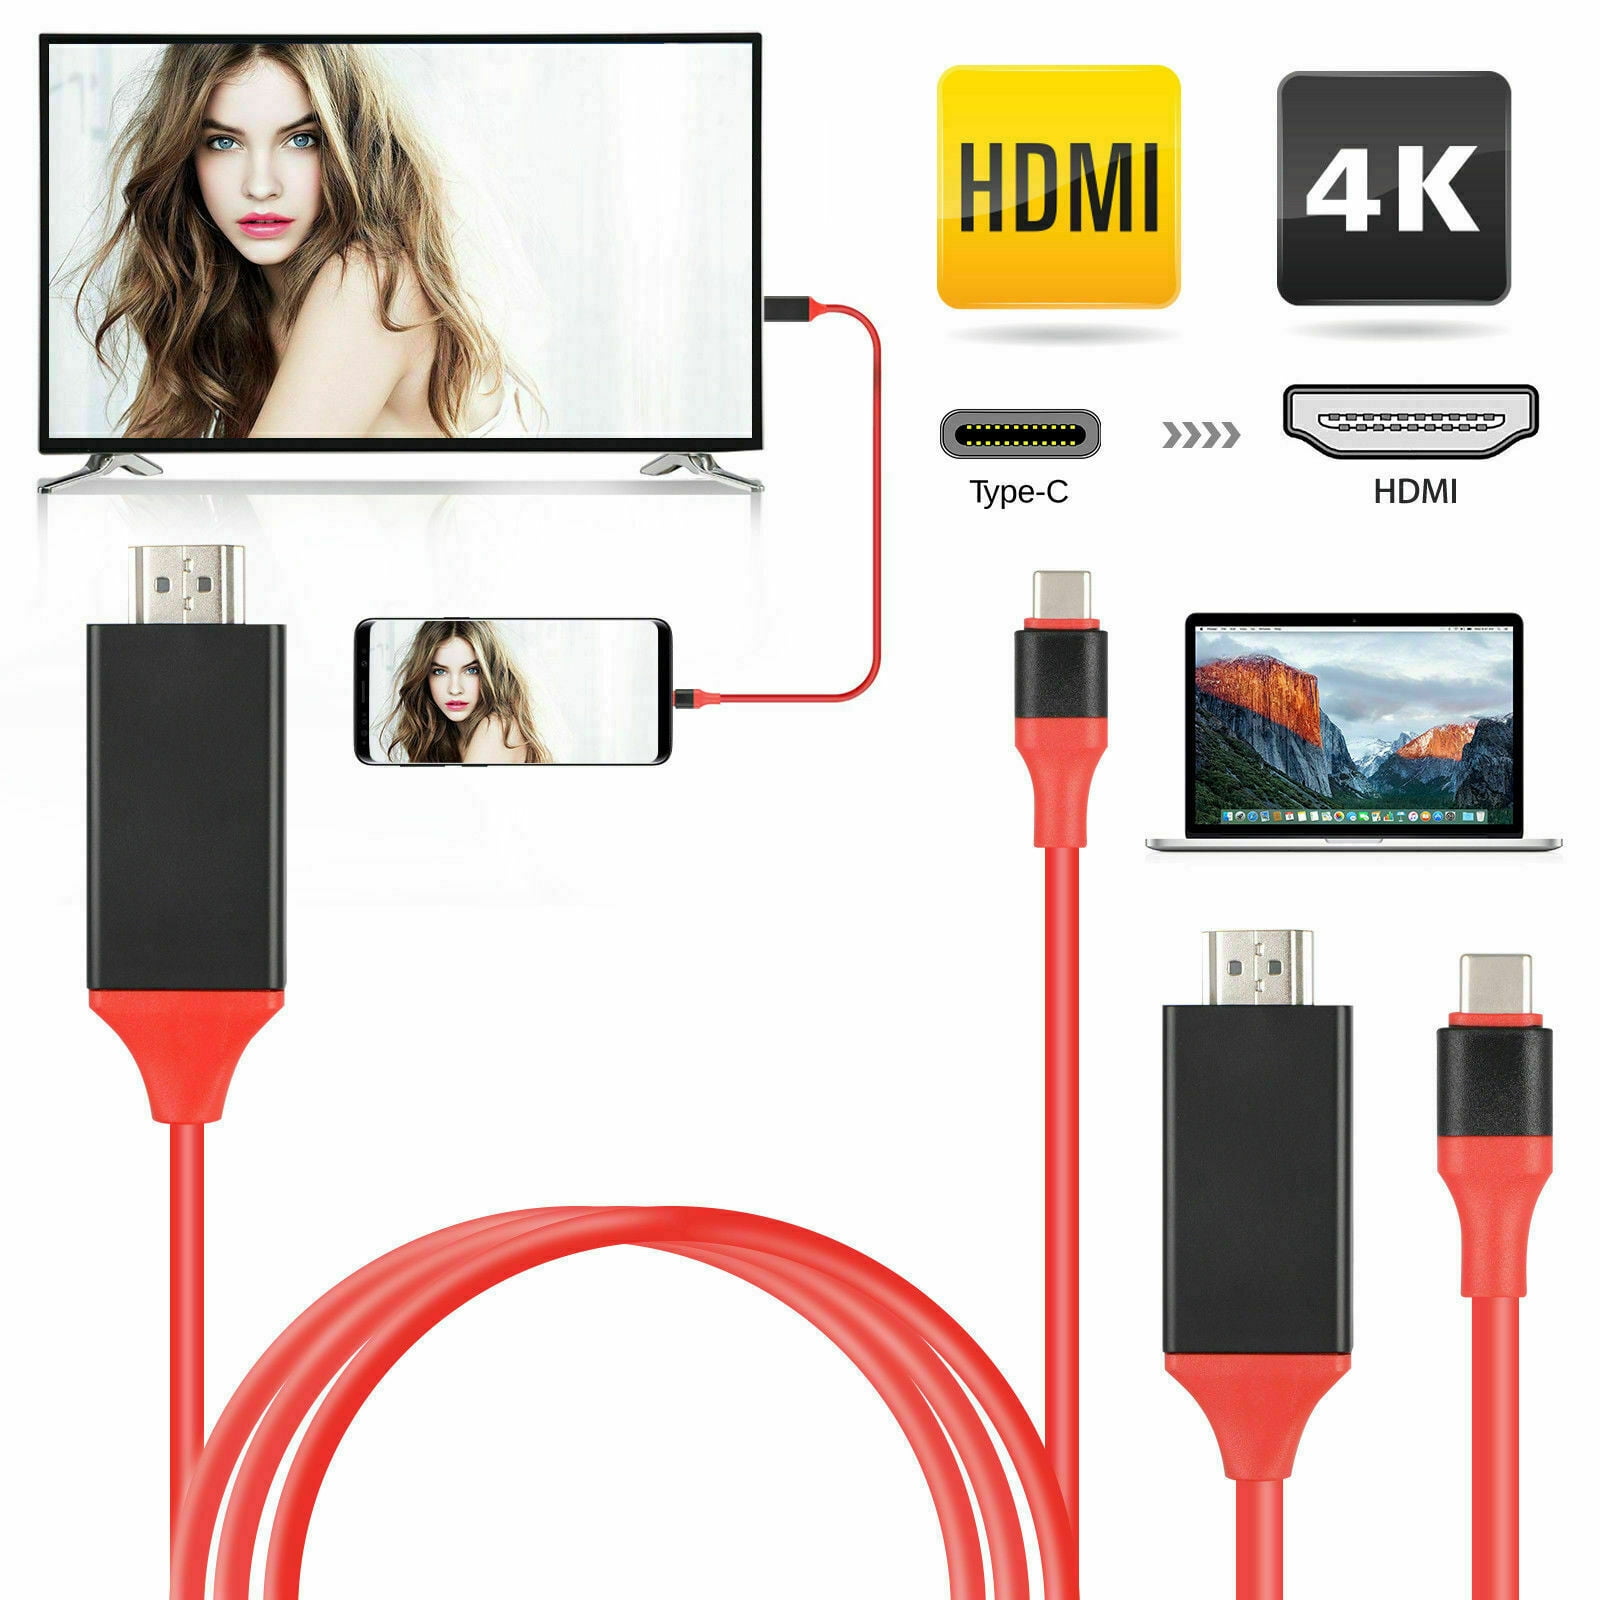 USB C Type C to HDMI HDTV AV TV Adapter For Samsung Galaxy S10/S10E/S9/S9 Plus/Note 9/8/S8 Active/Plus, MacBook iPad Air iPad Pro LG G7/G6/V40, Oneplus 6T/6/5 Walmart.com